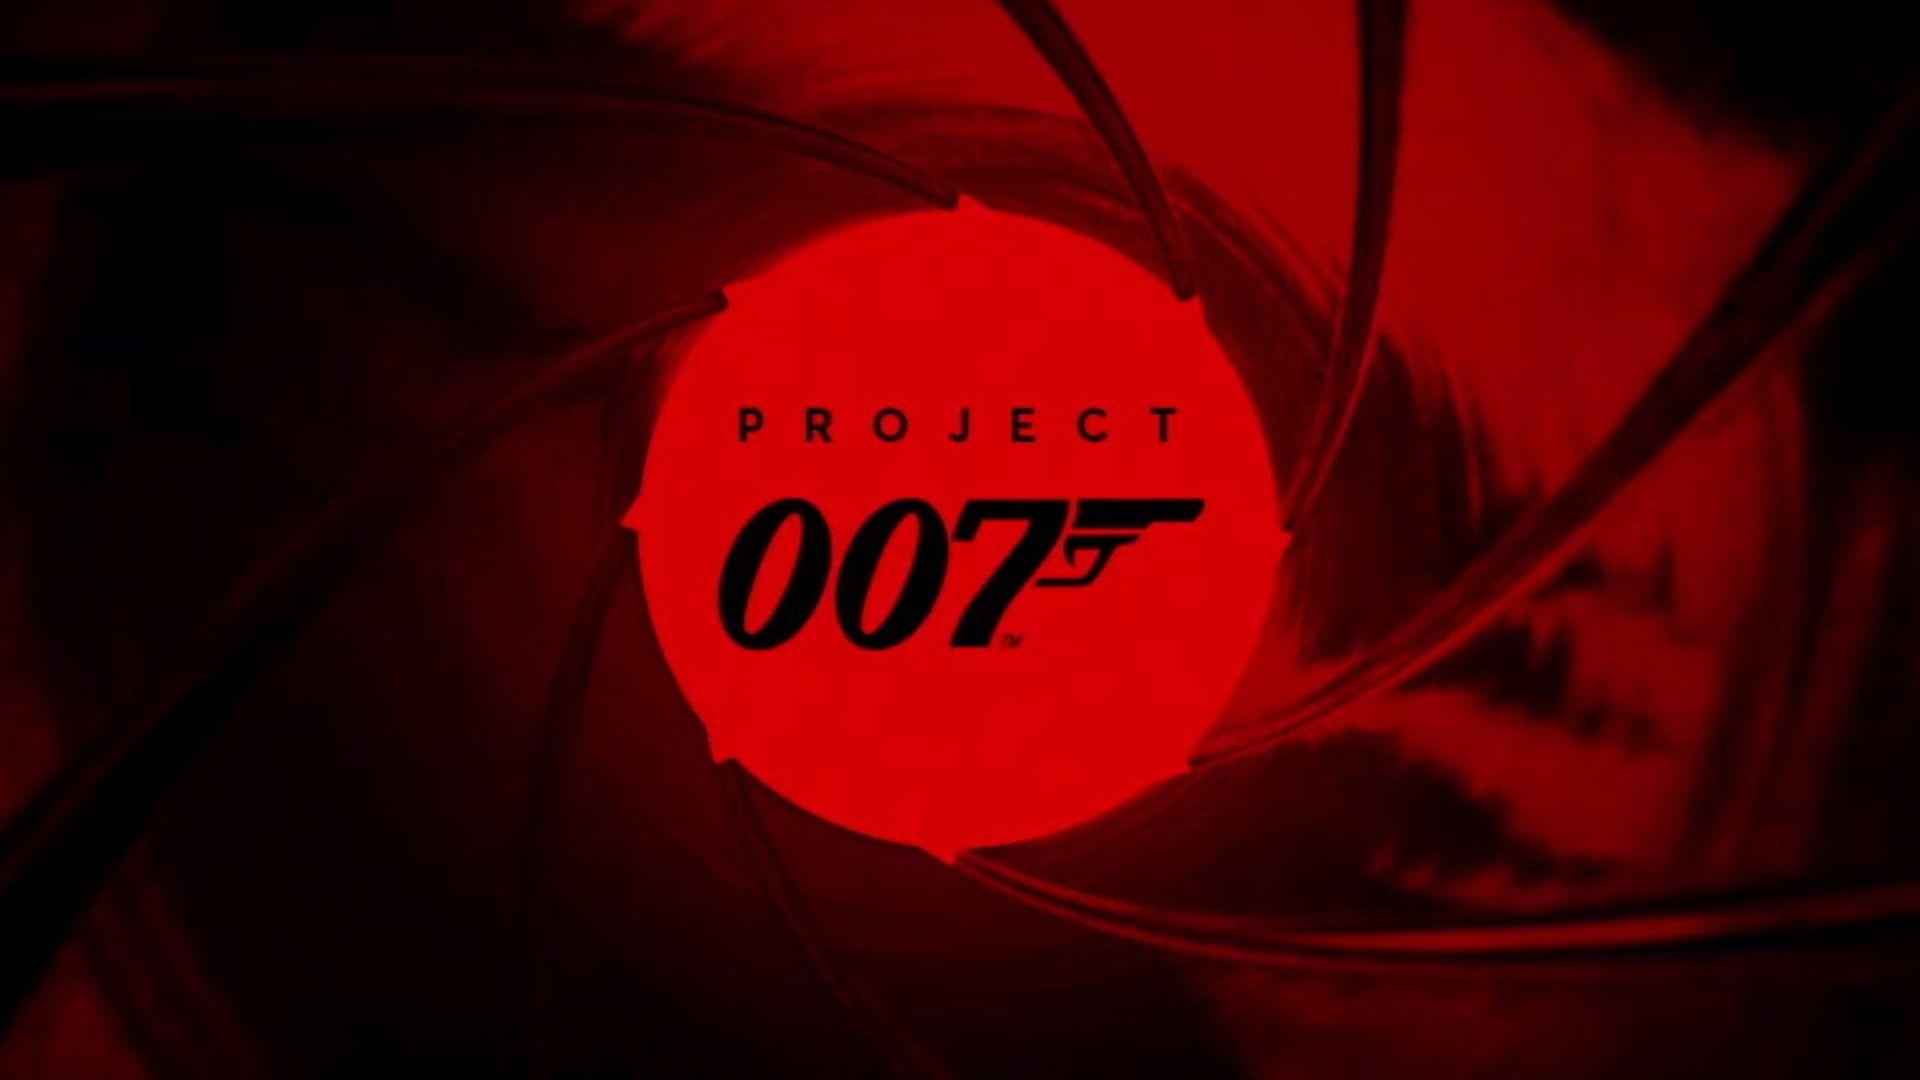 Projecto 007 James Bond Logo